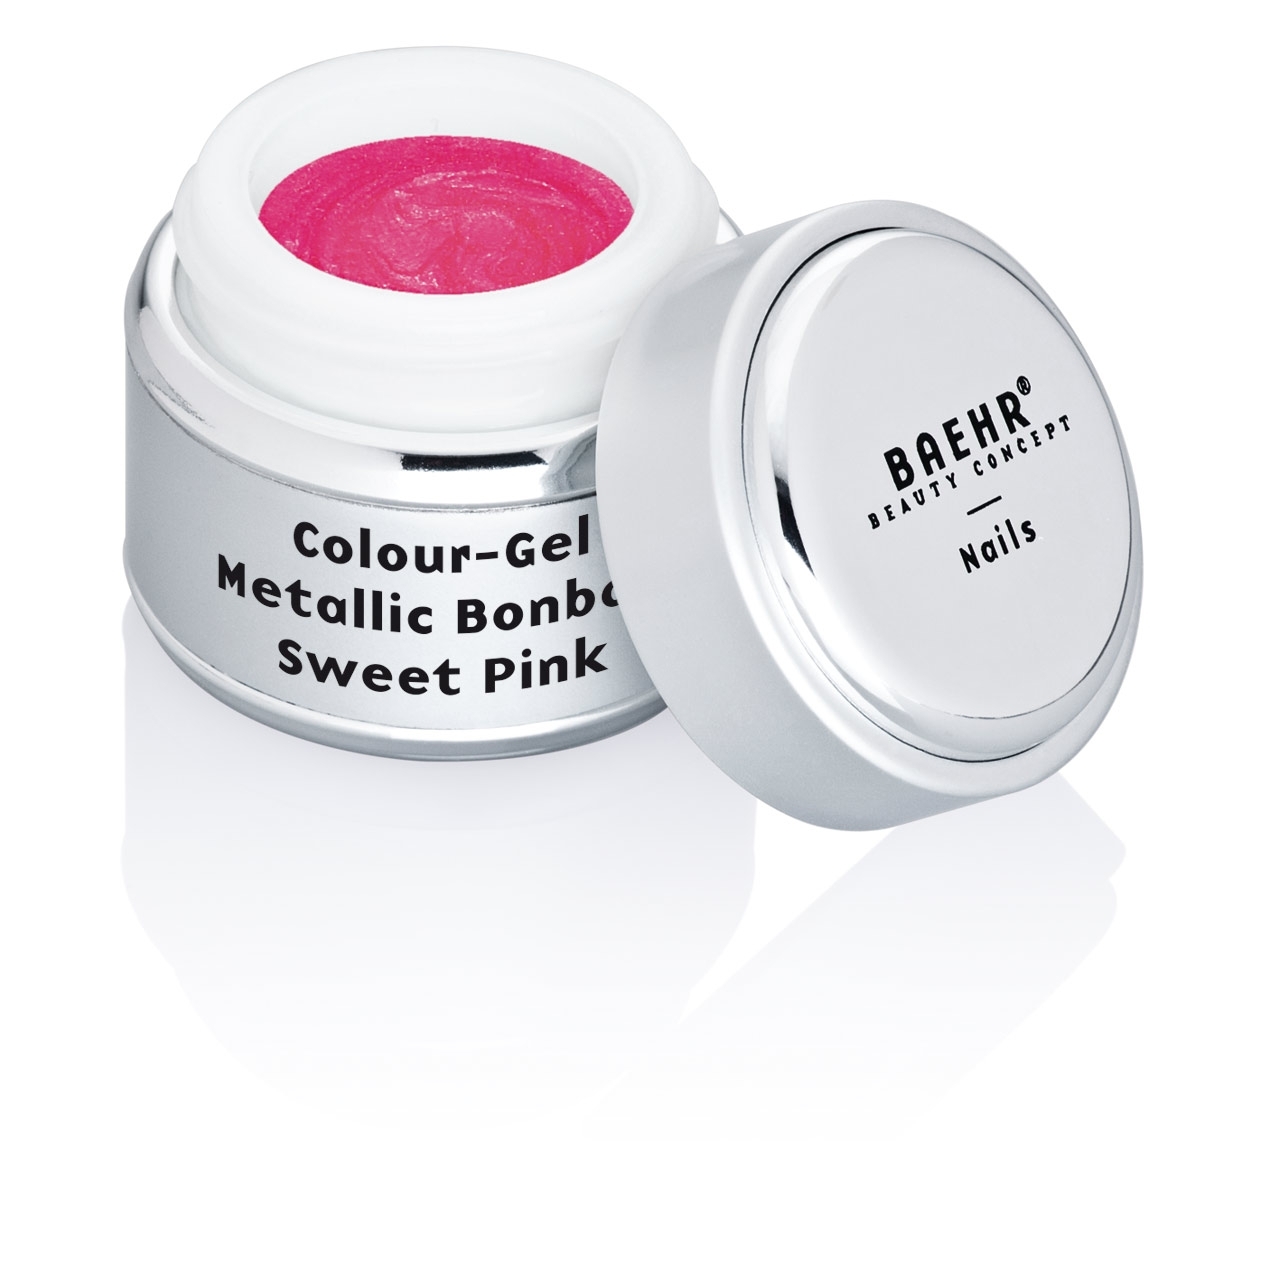 BAEHR BEAUTY CONCEPT - NAILS Colour-Gel Metallic Bonbon Dark Pink 5 ml